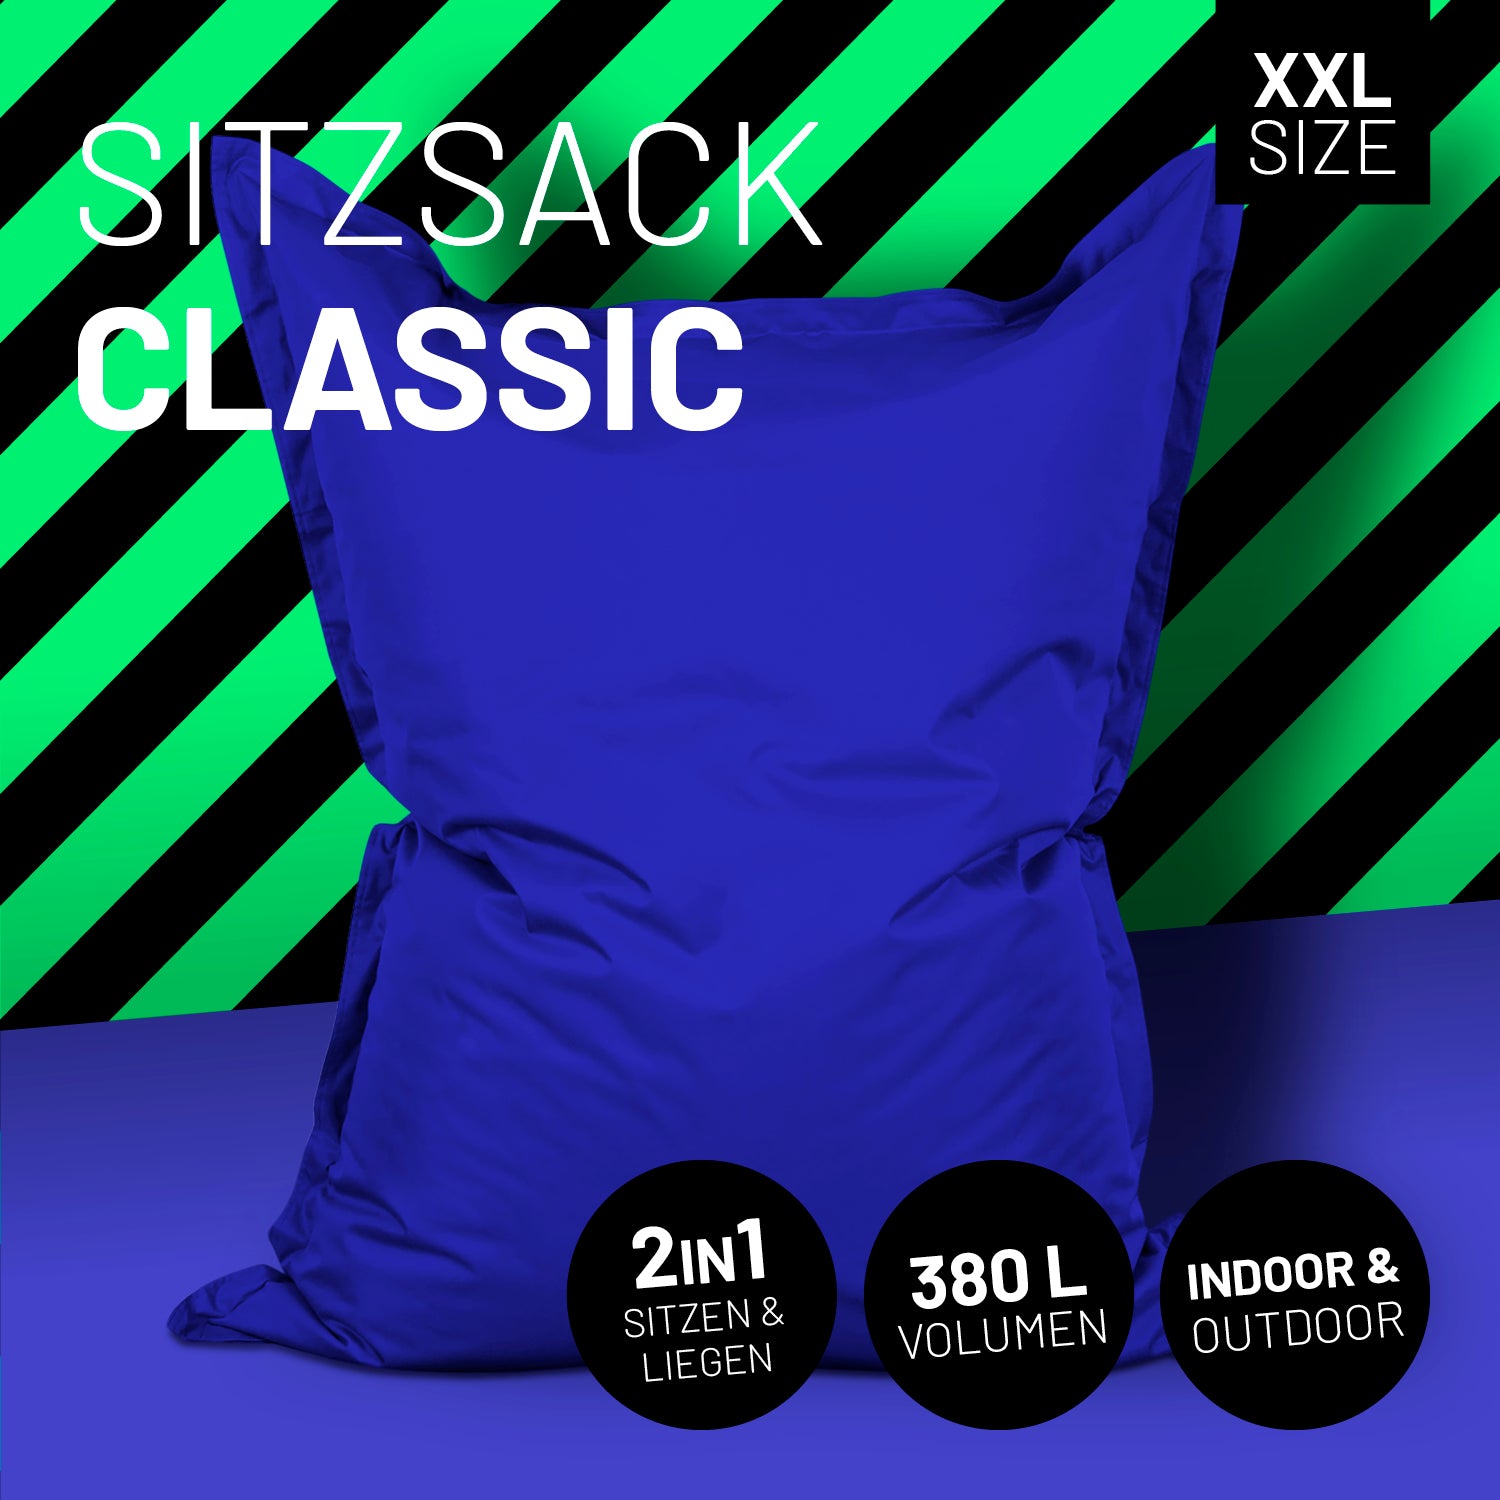 Sitzsack Classic XXL (380 L) - indoor & outdoor - Royalblau